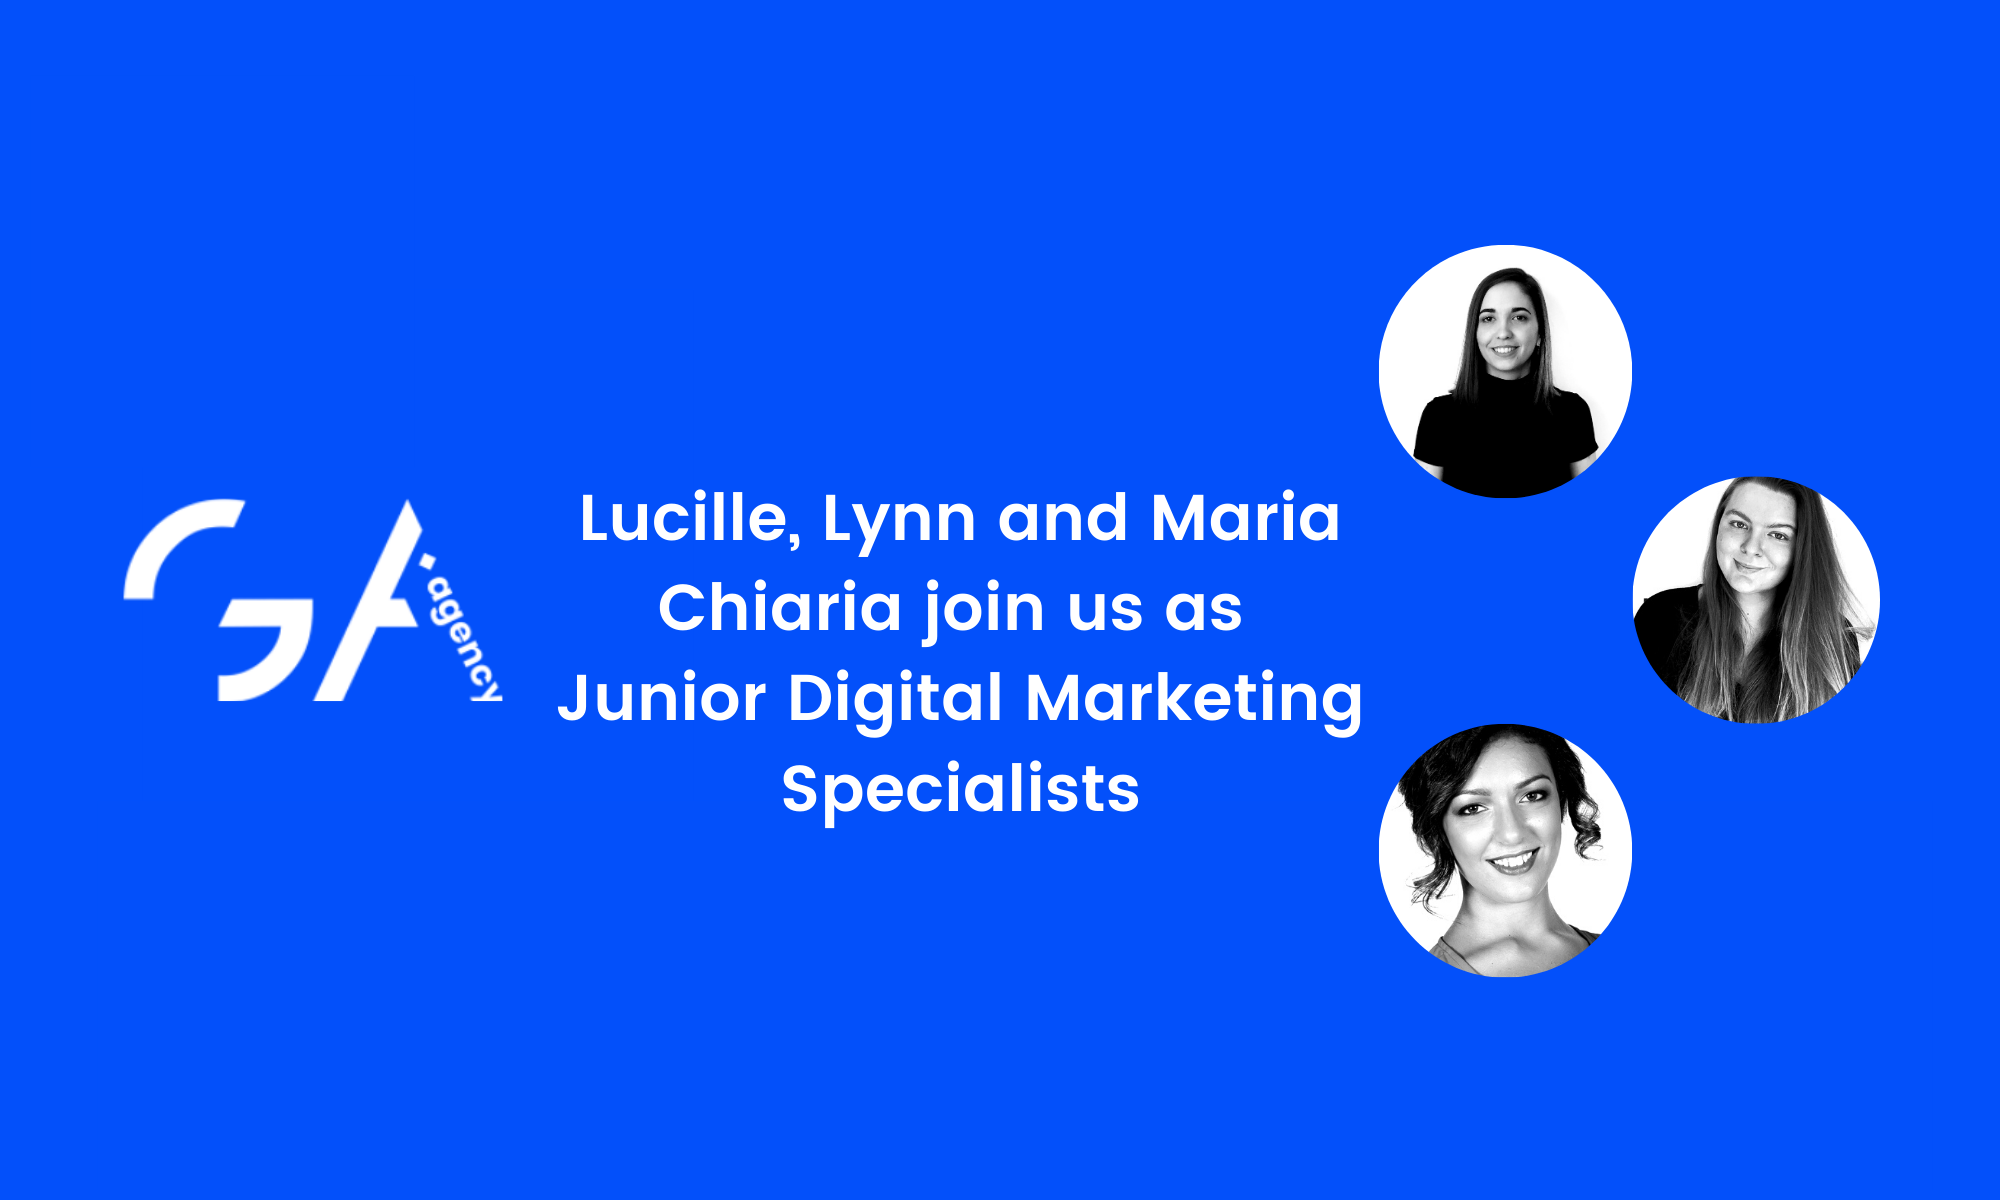 Lucille, Lynn and Maria Chiara join GA Agency as Junior Digital Marketing Specialists